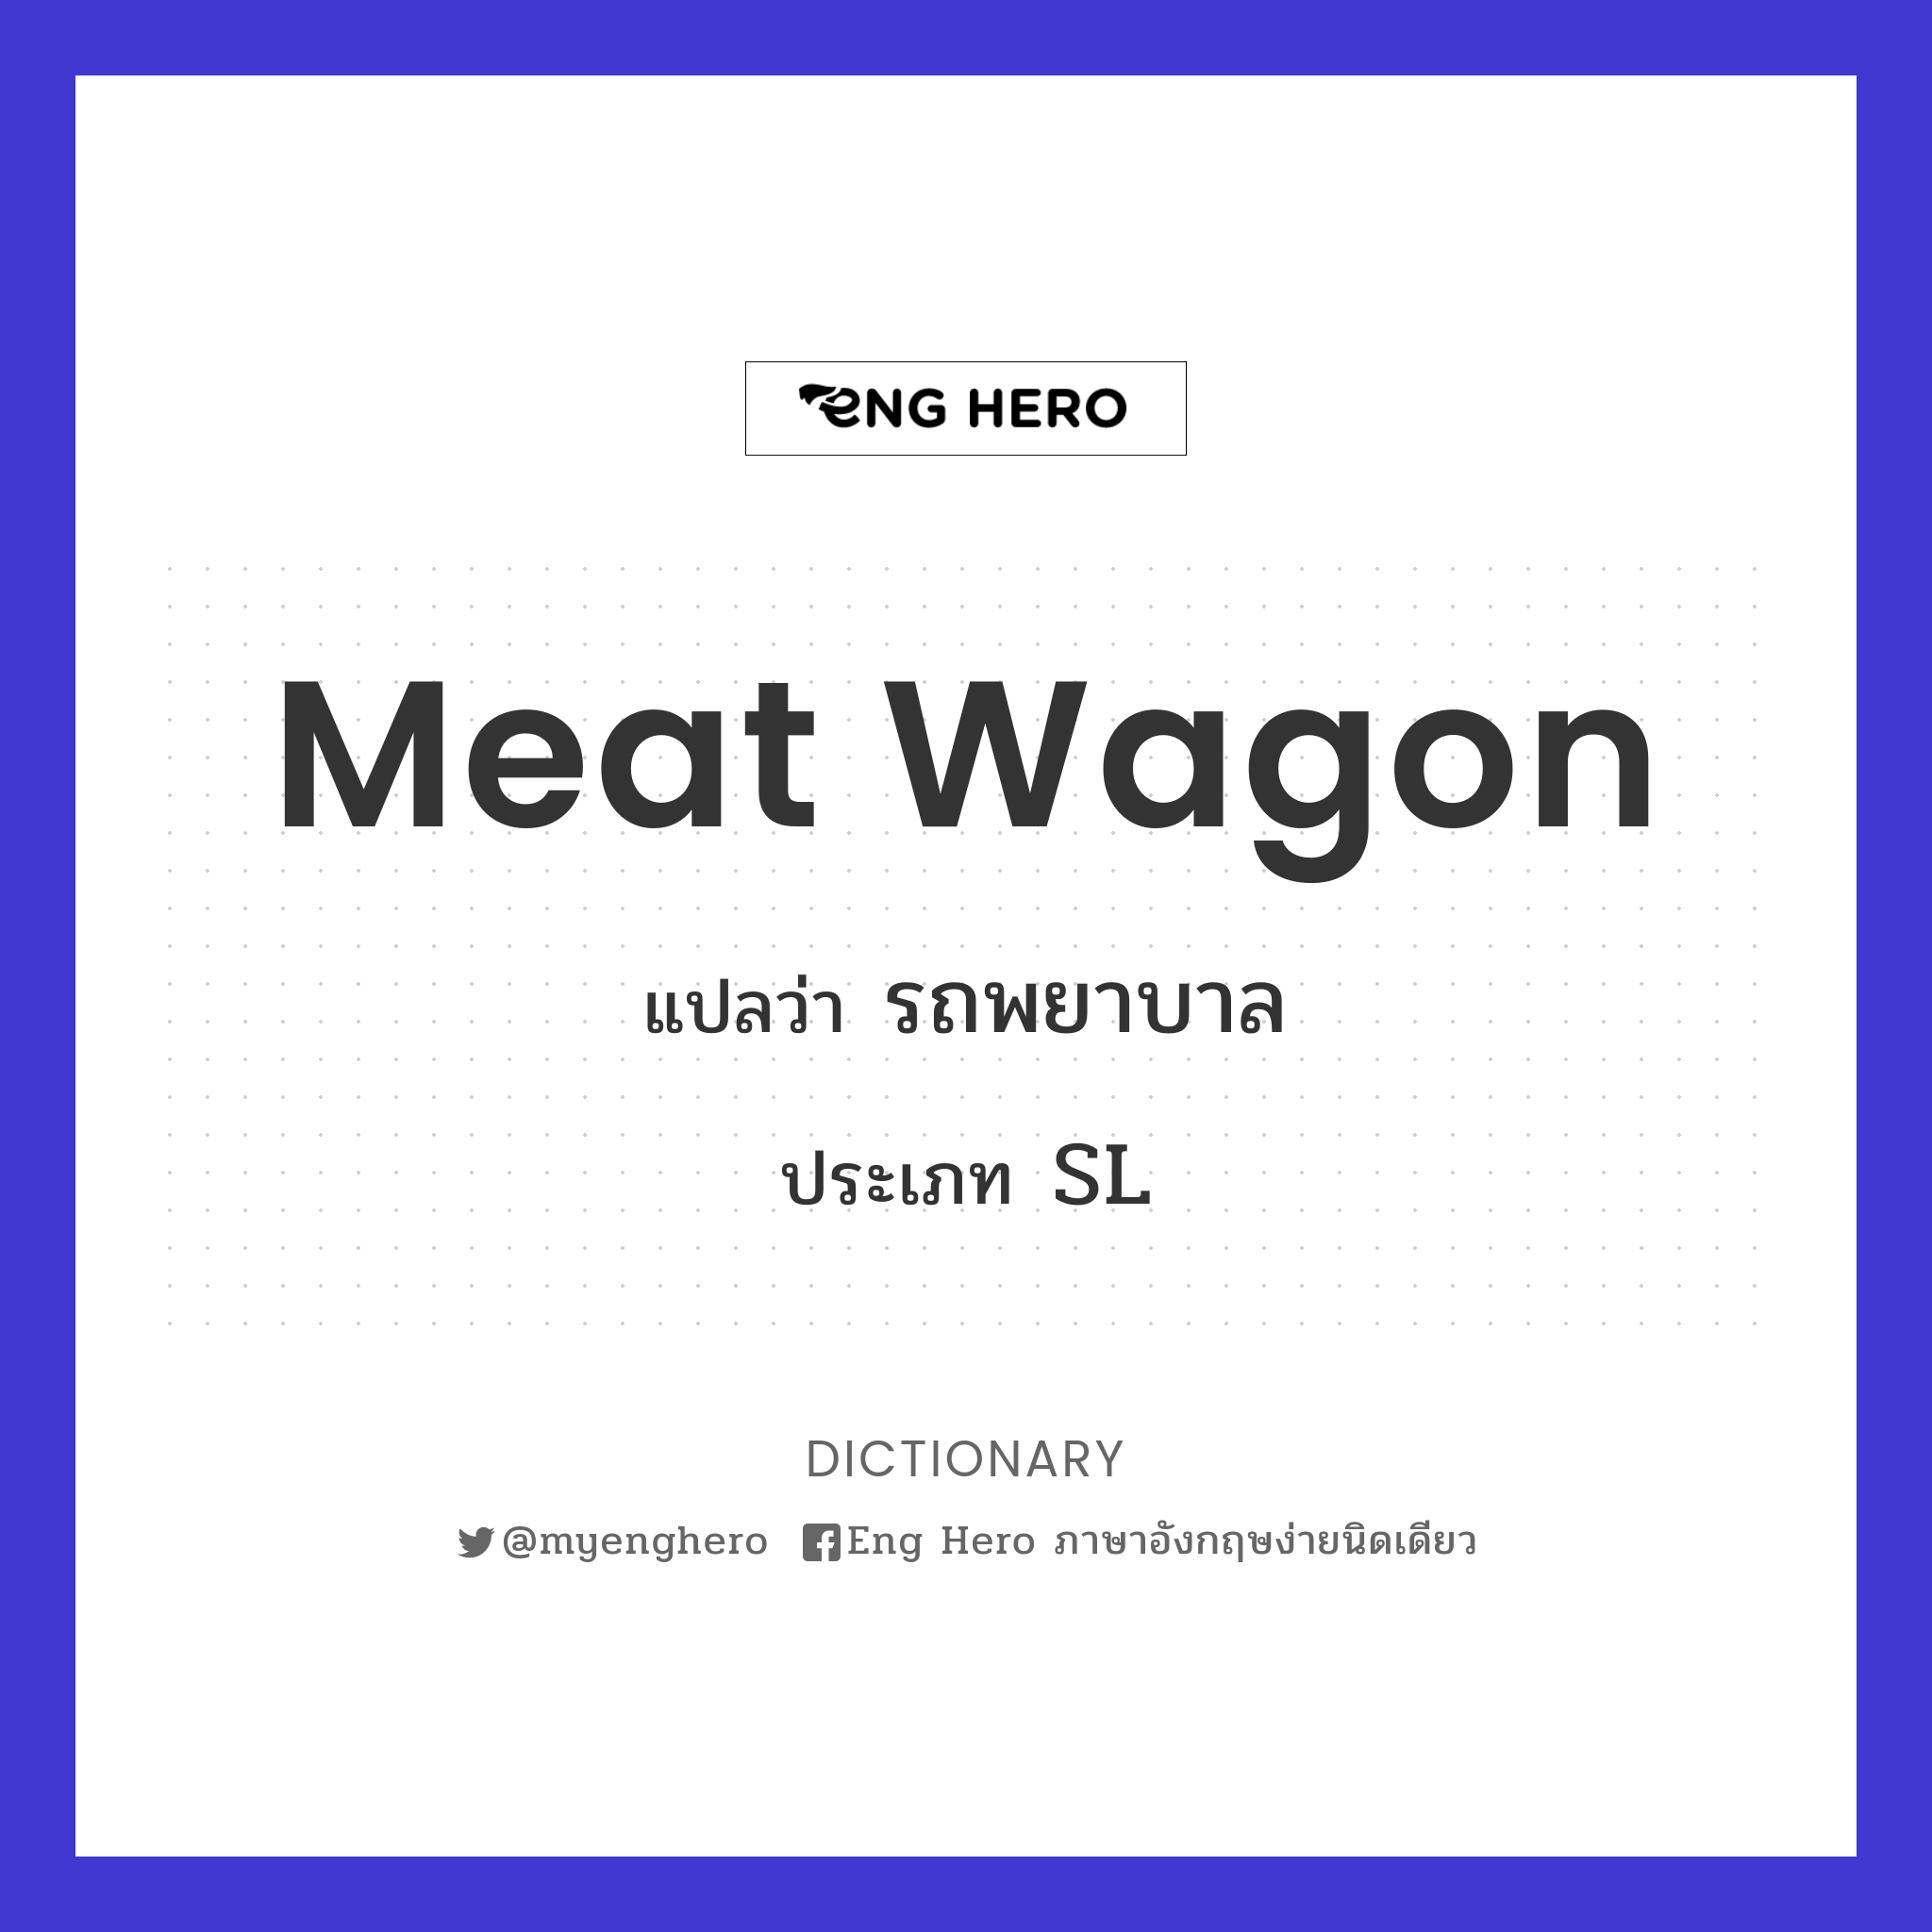 meat wagon